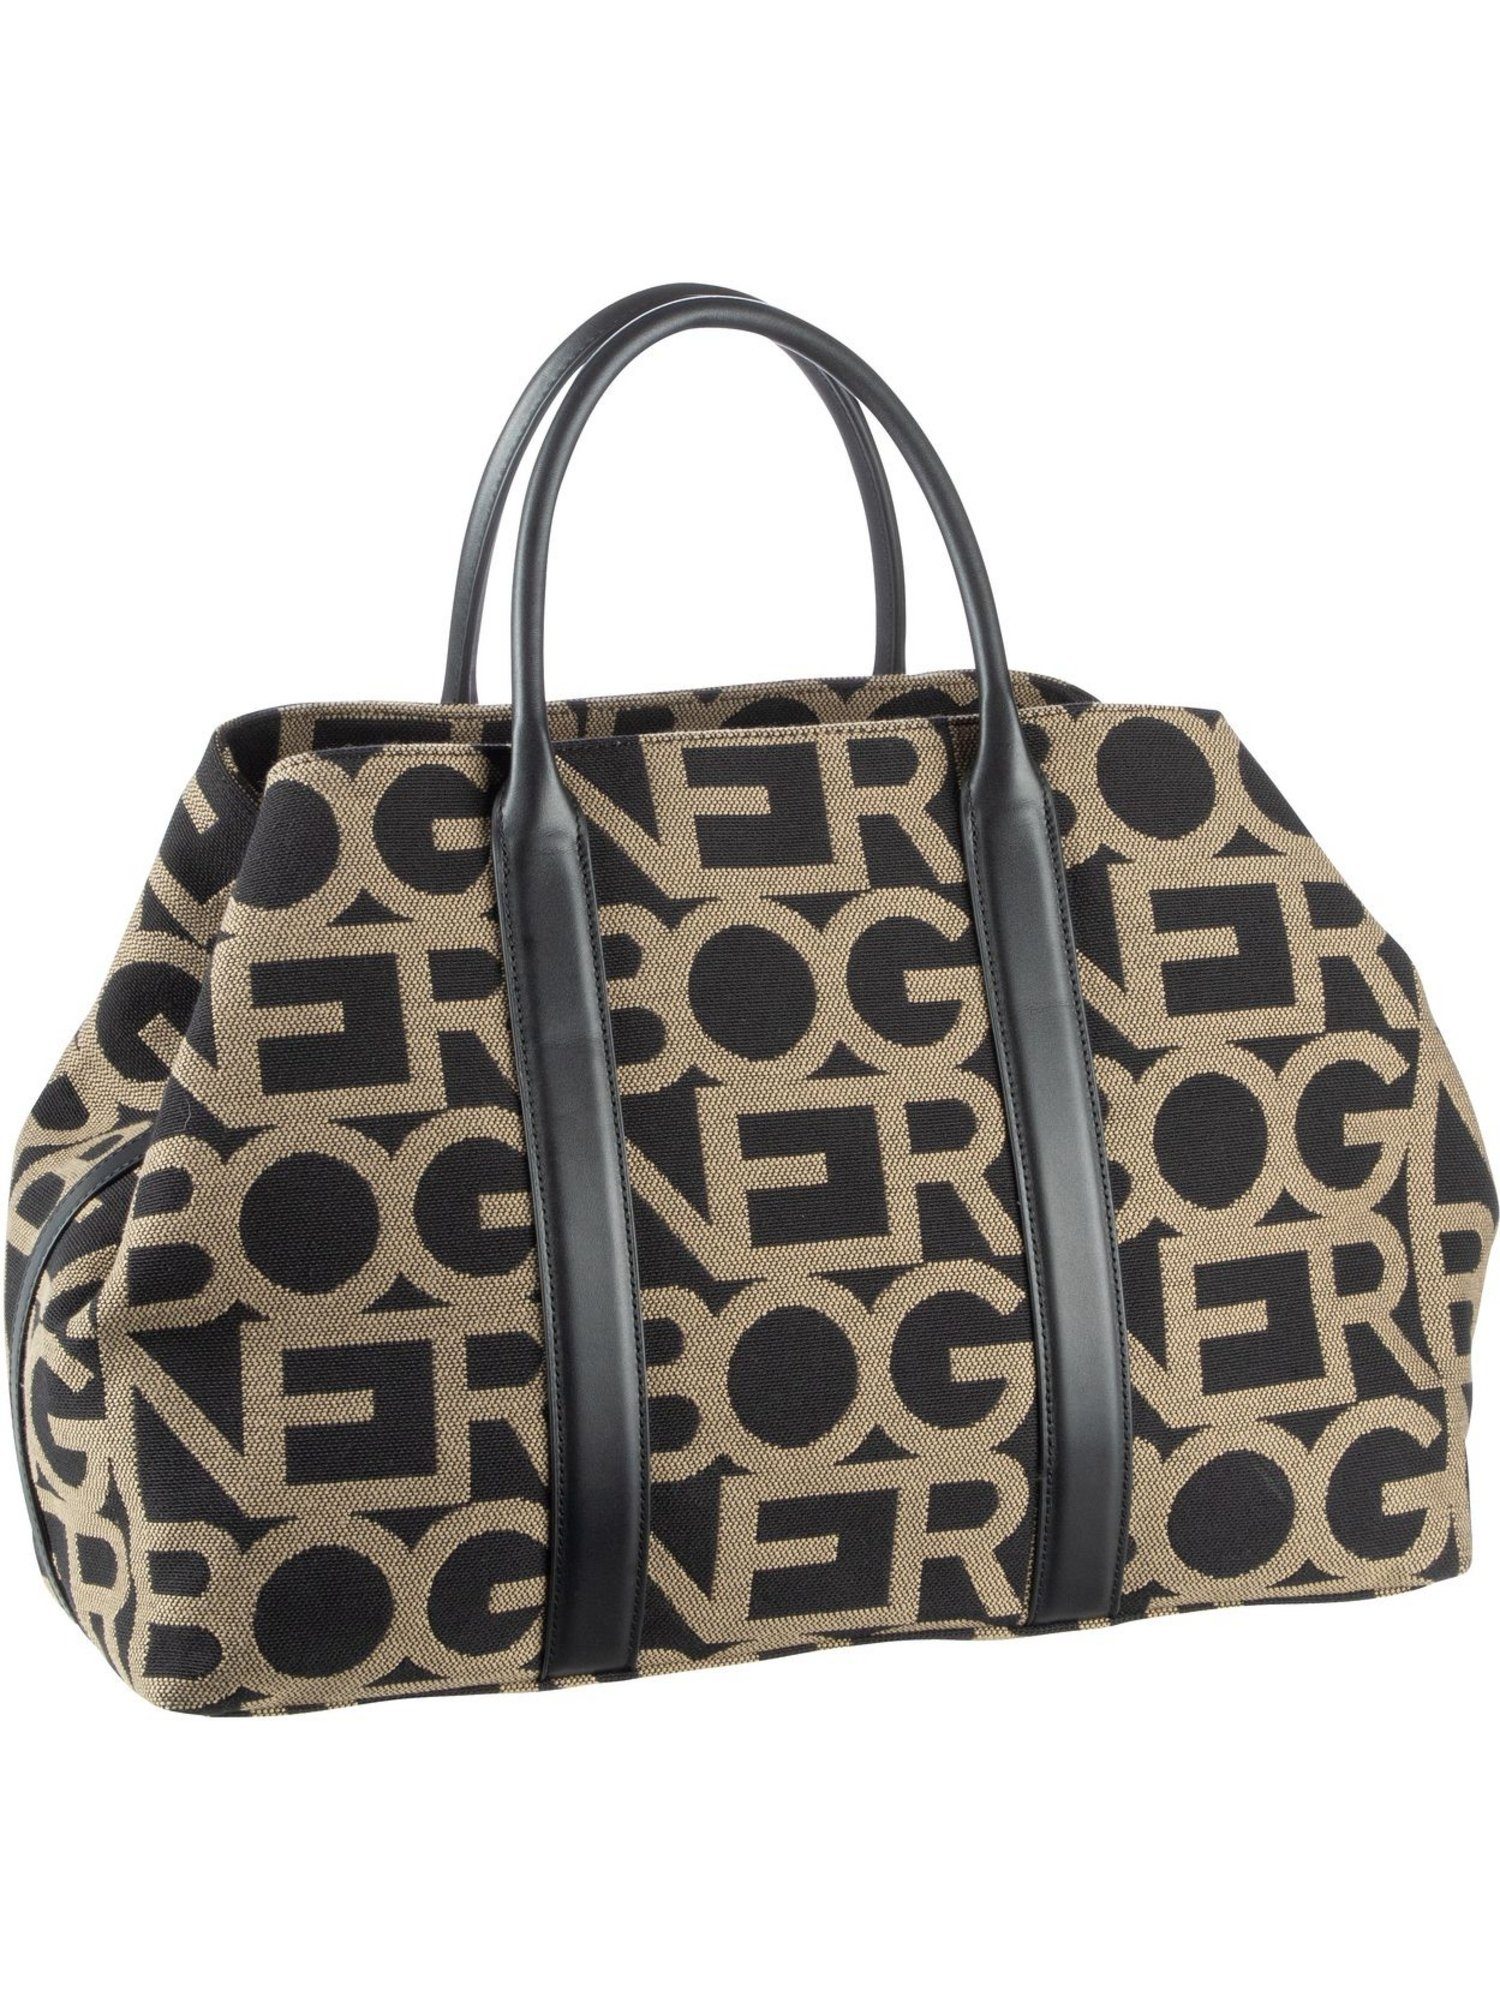 Bogner Handtasche »Pany Theresa Handbag XLHO«, Shopper online kaufen | OTTO